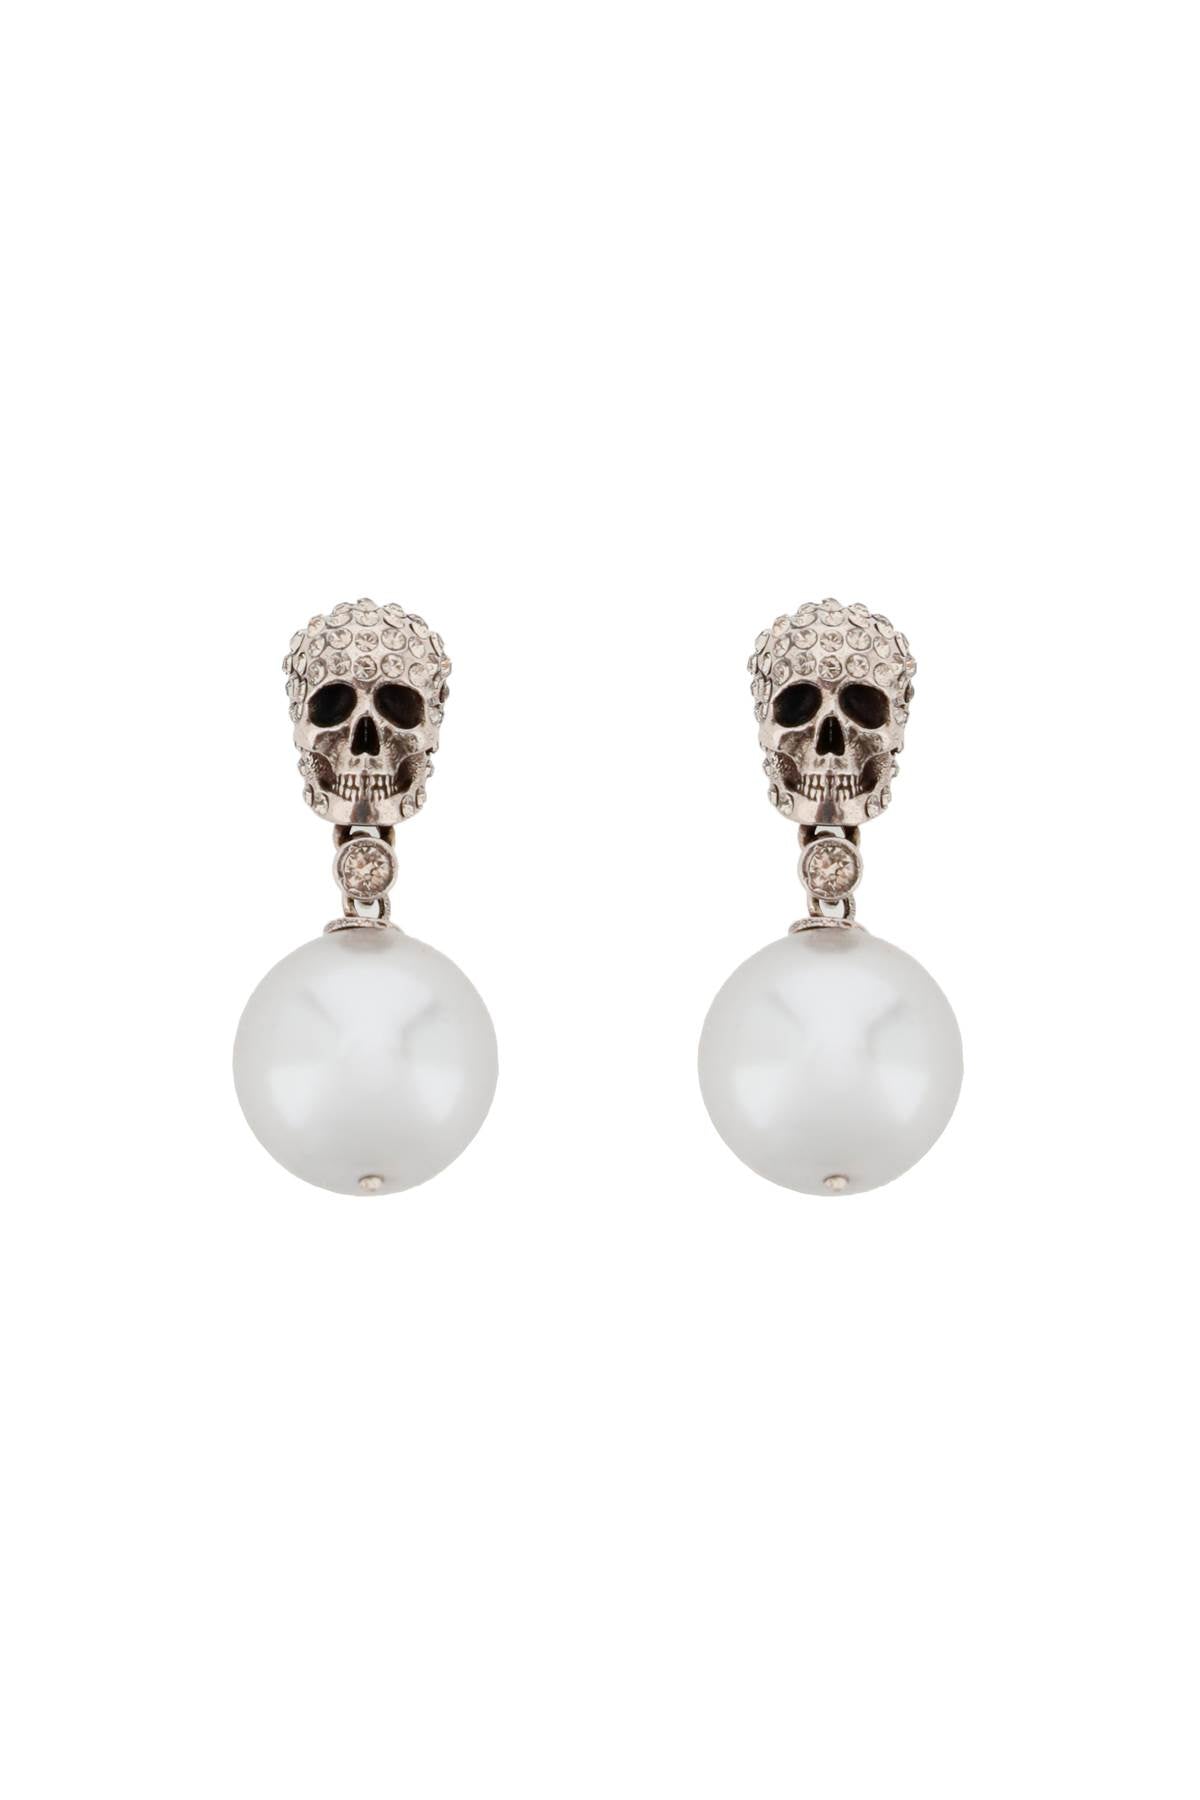 Alexander mcqueen pearl skull earrings with crystal pavé 734746 I170E 0446 GREIGE